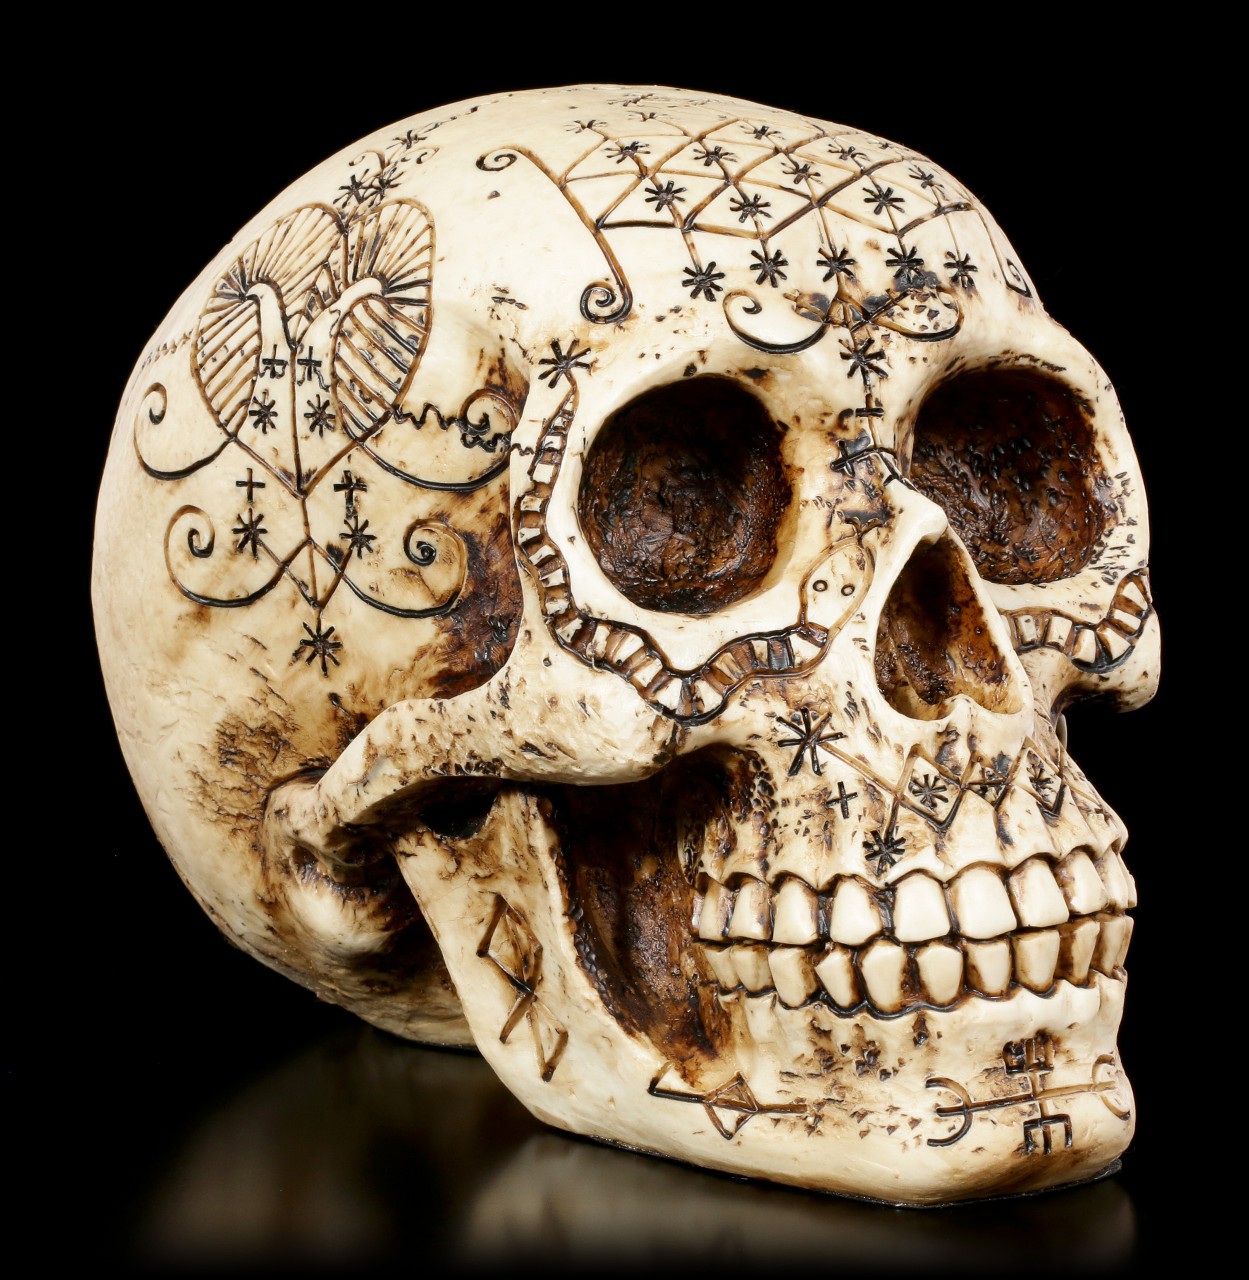 Skull with Fantasy Decorations